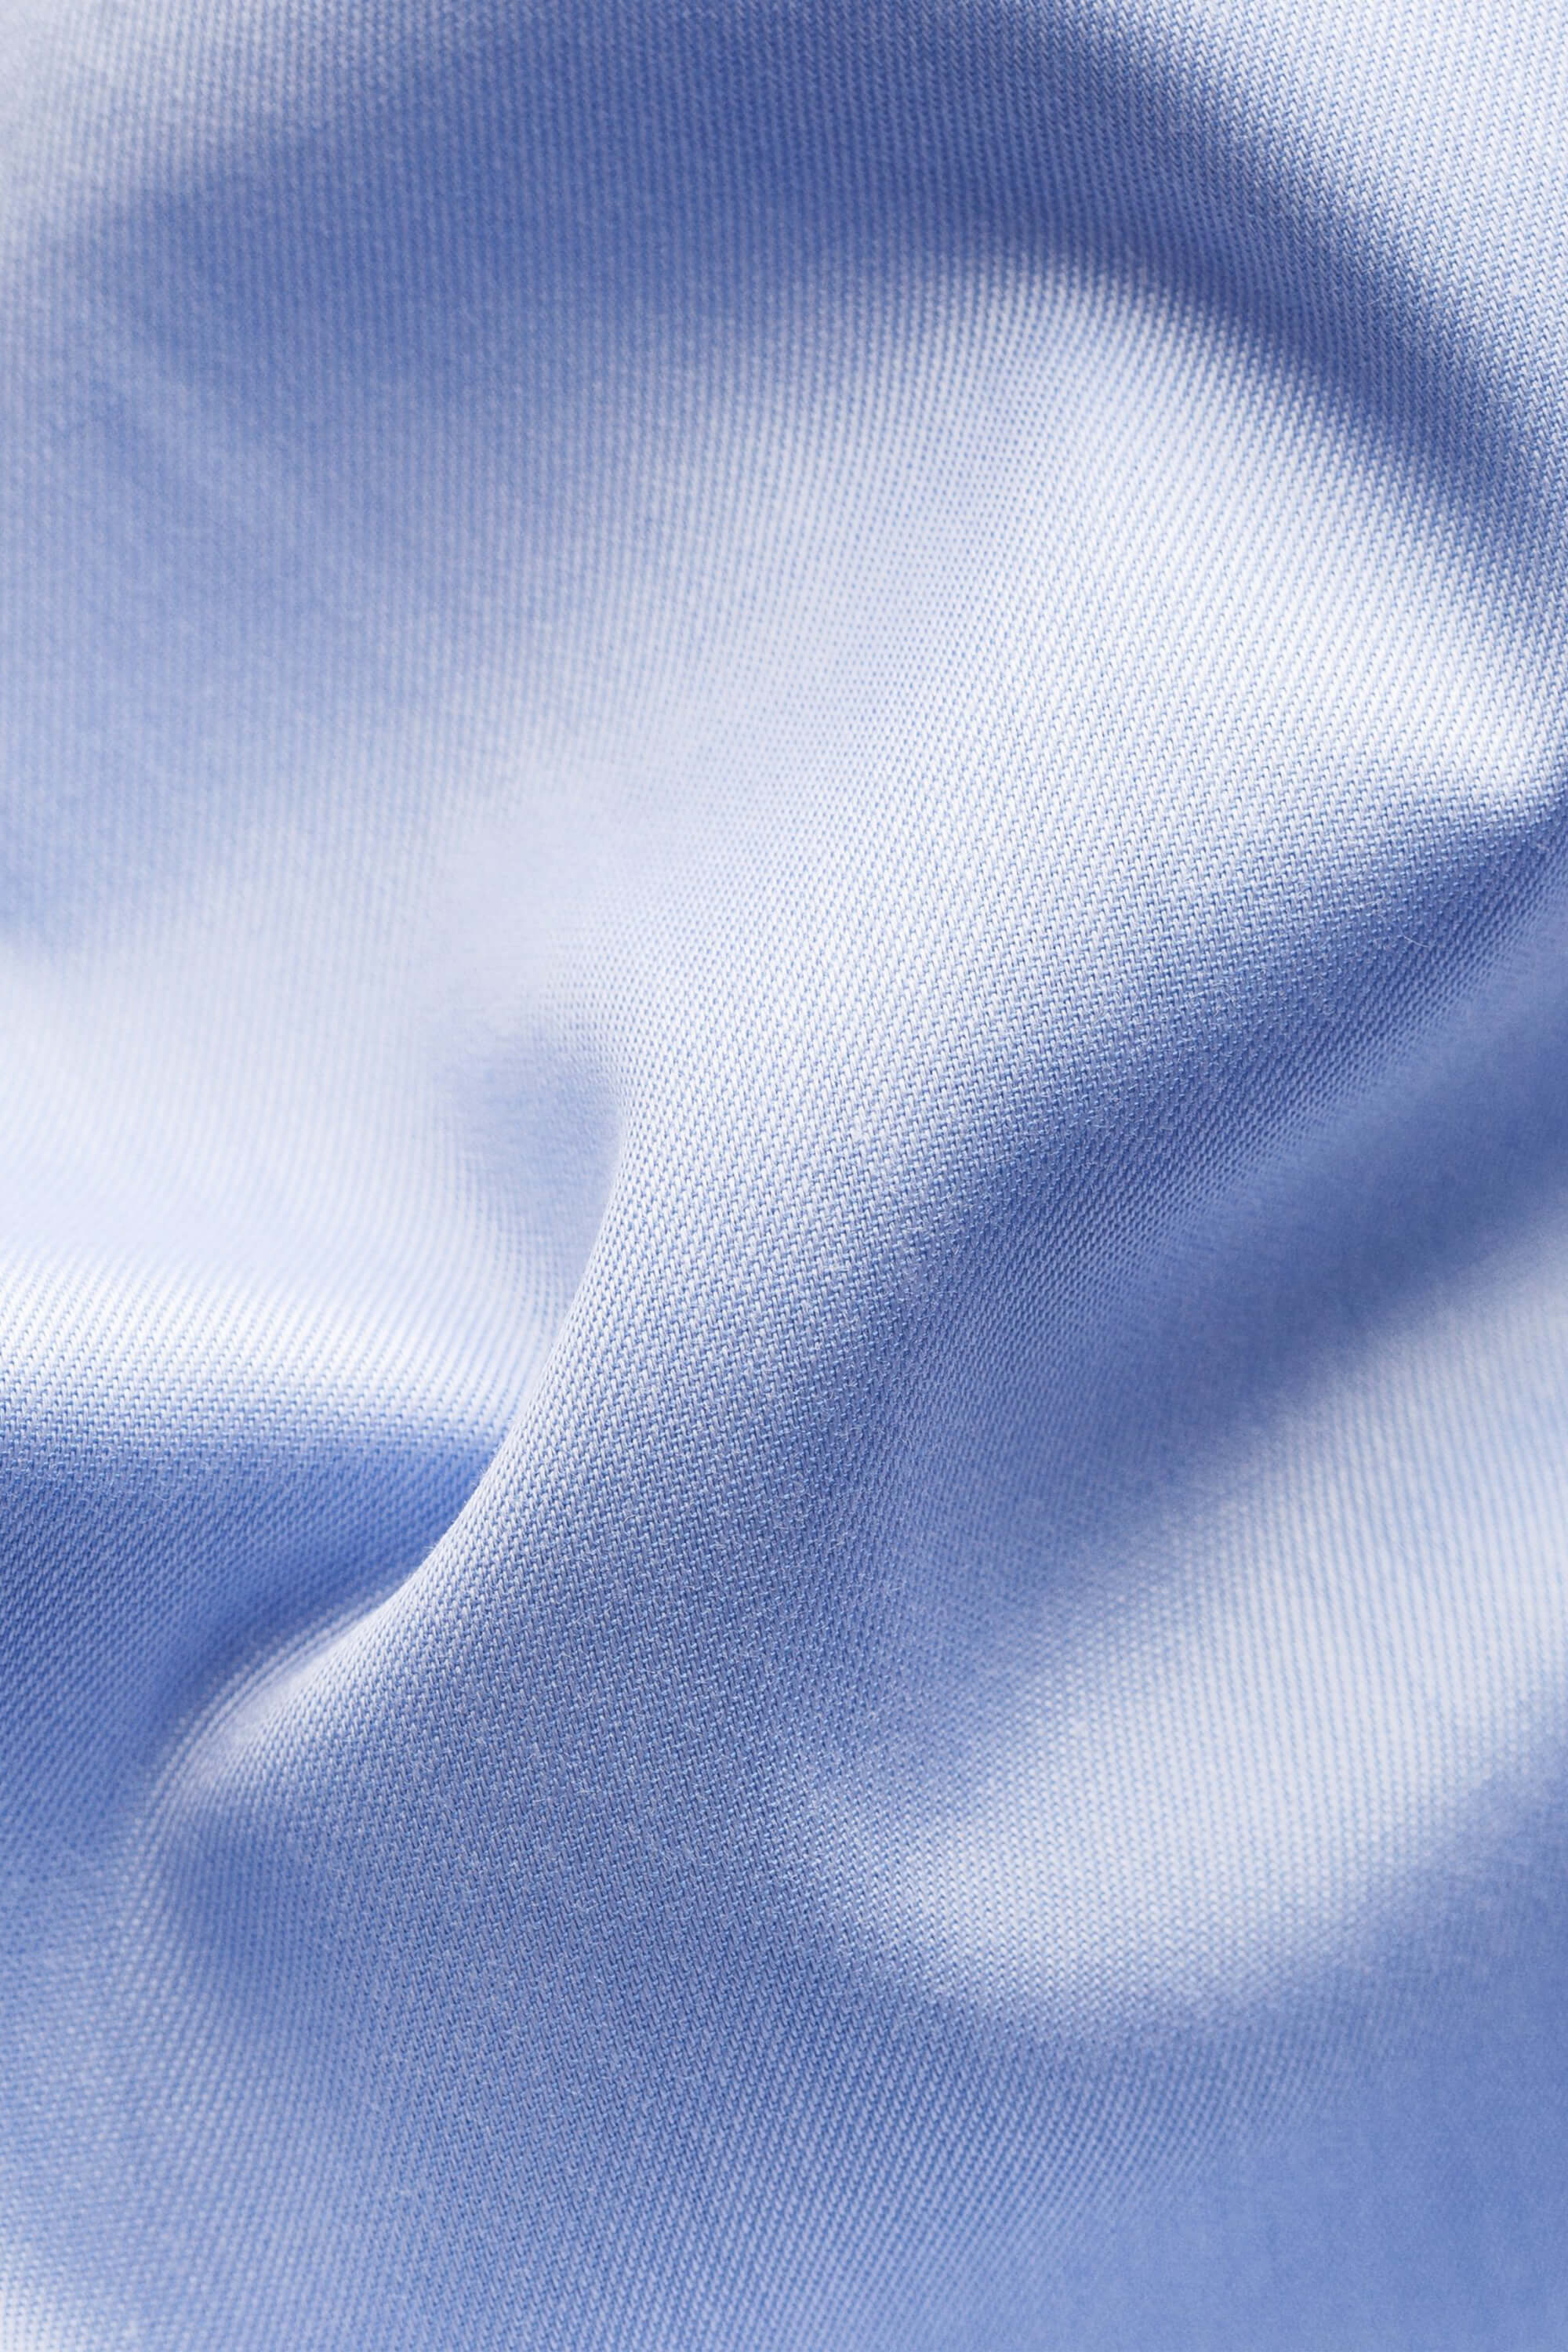 Eton Light Blue Paisley Signature Twill Shirt